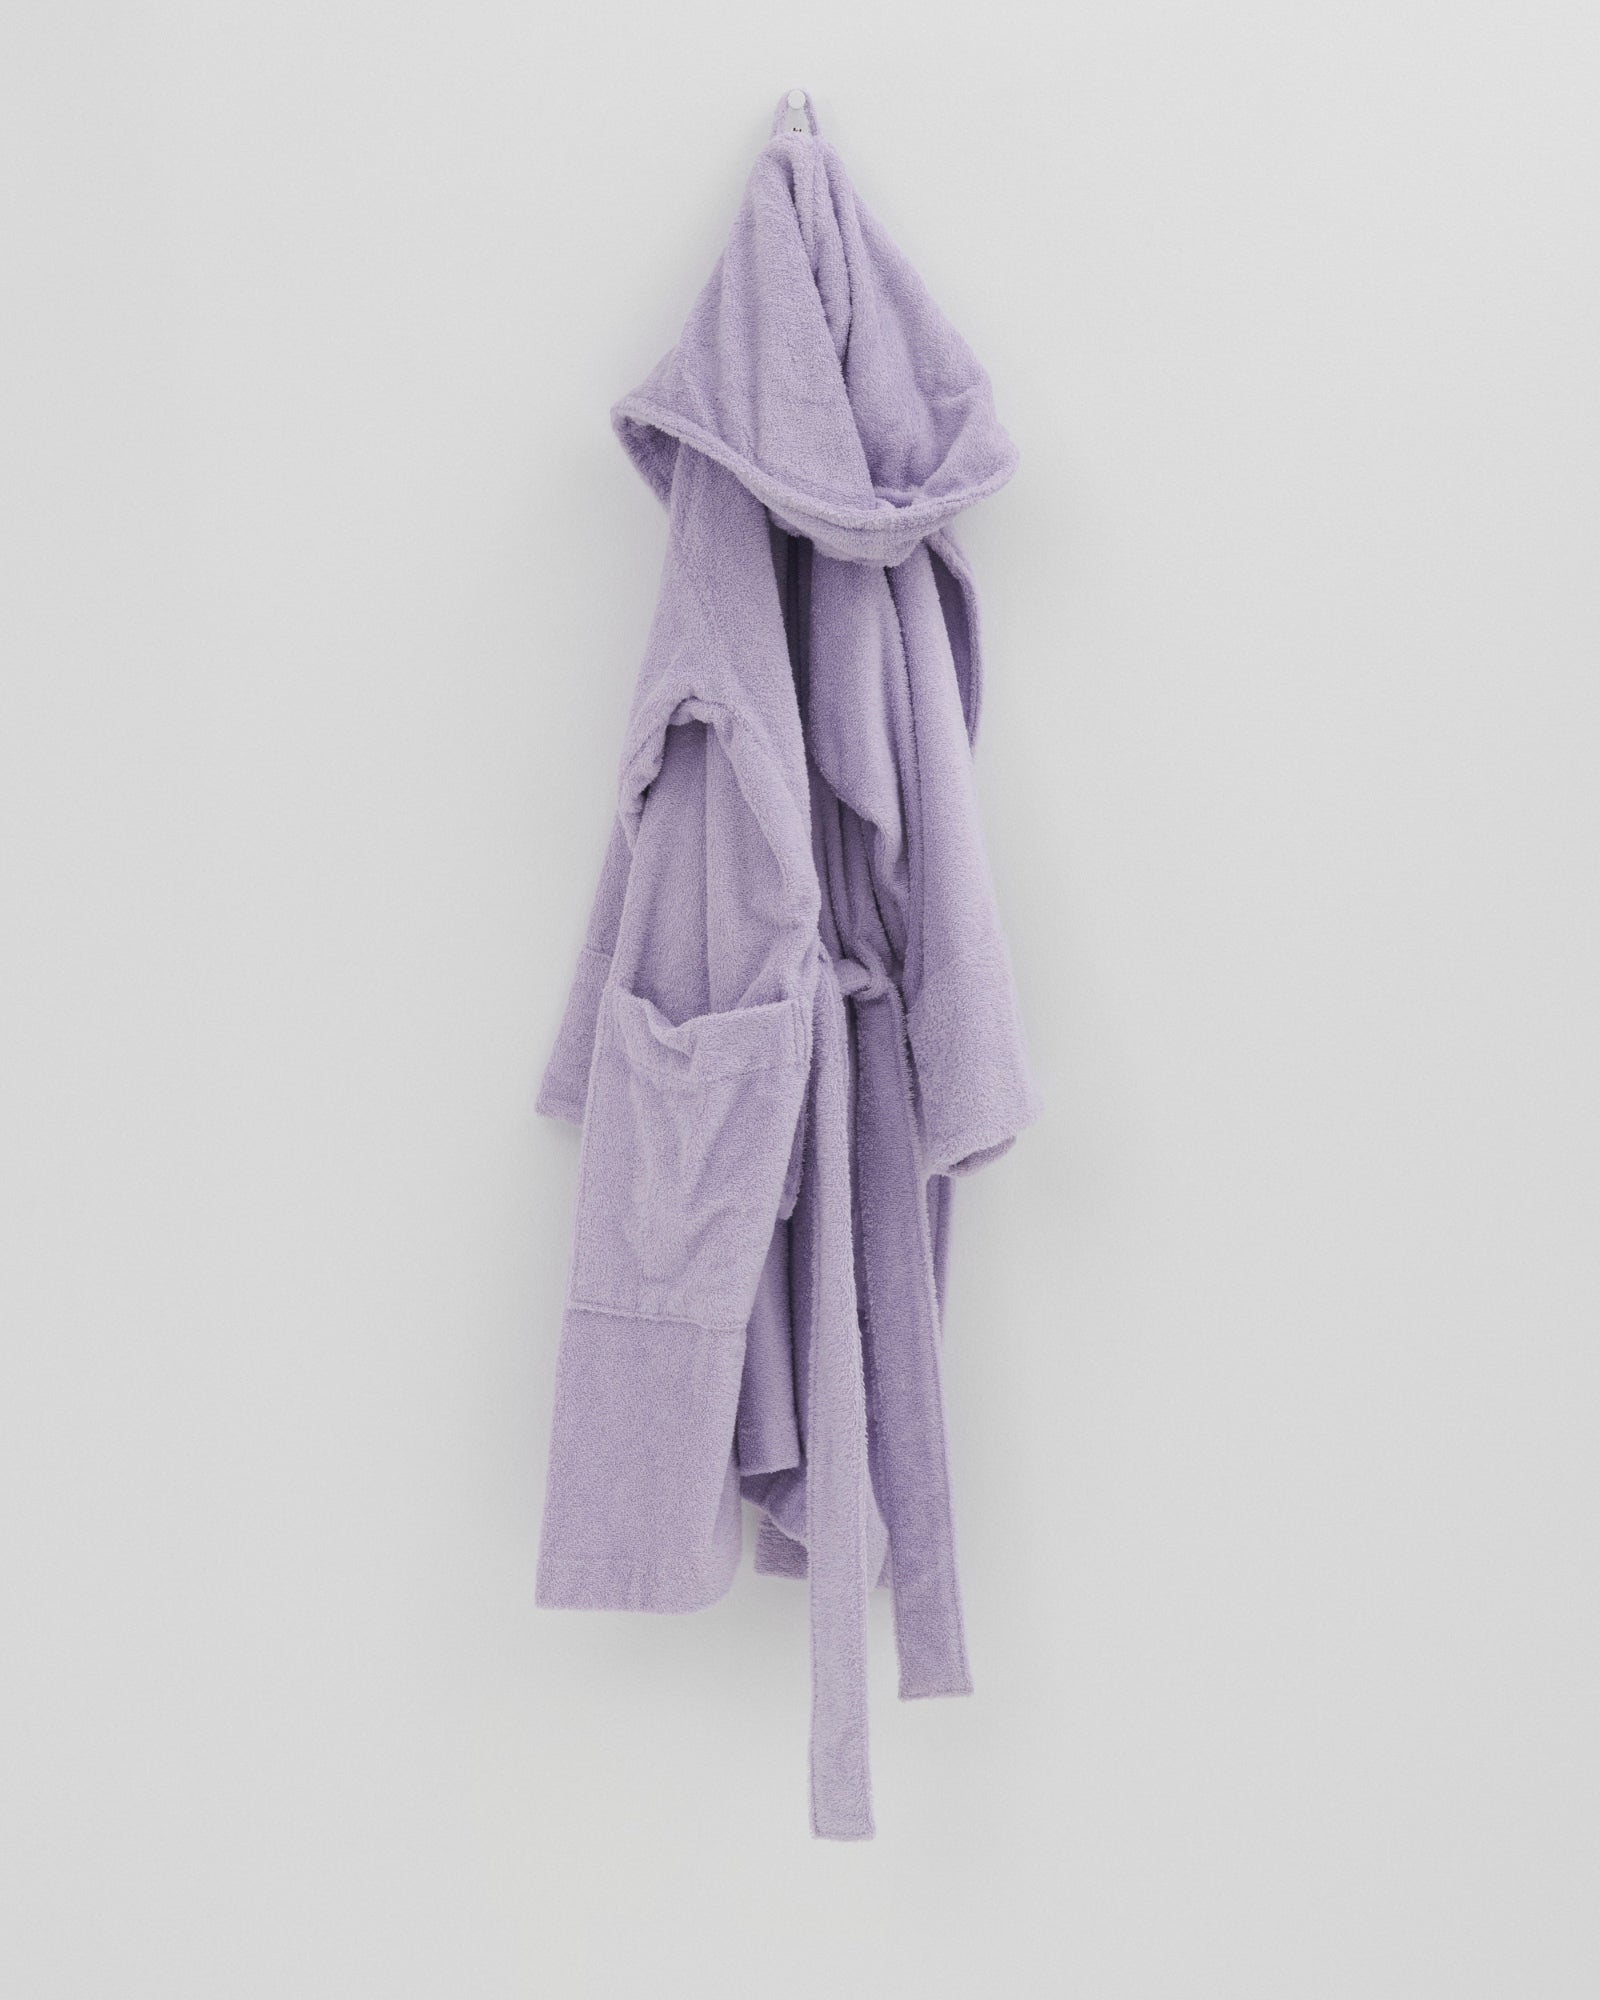 Hooded Bathrobe in Lavender